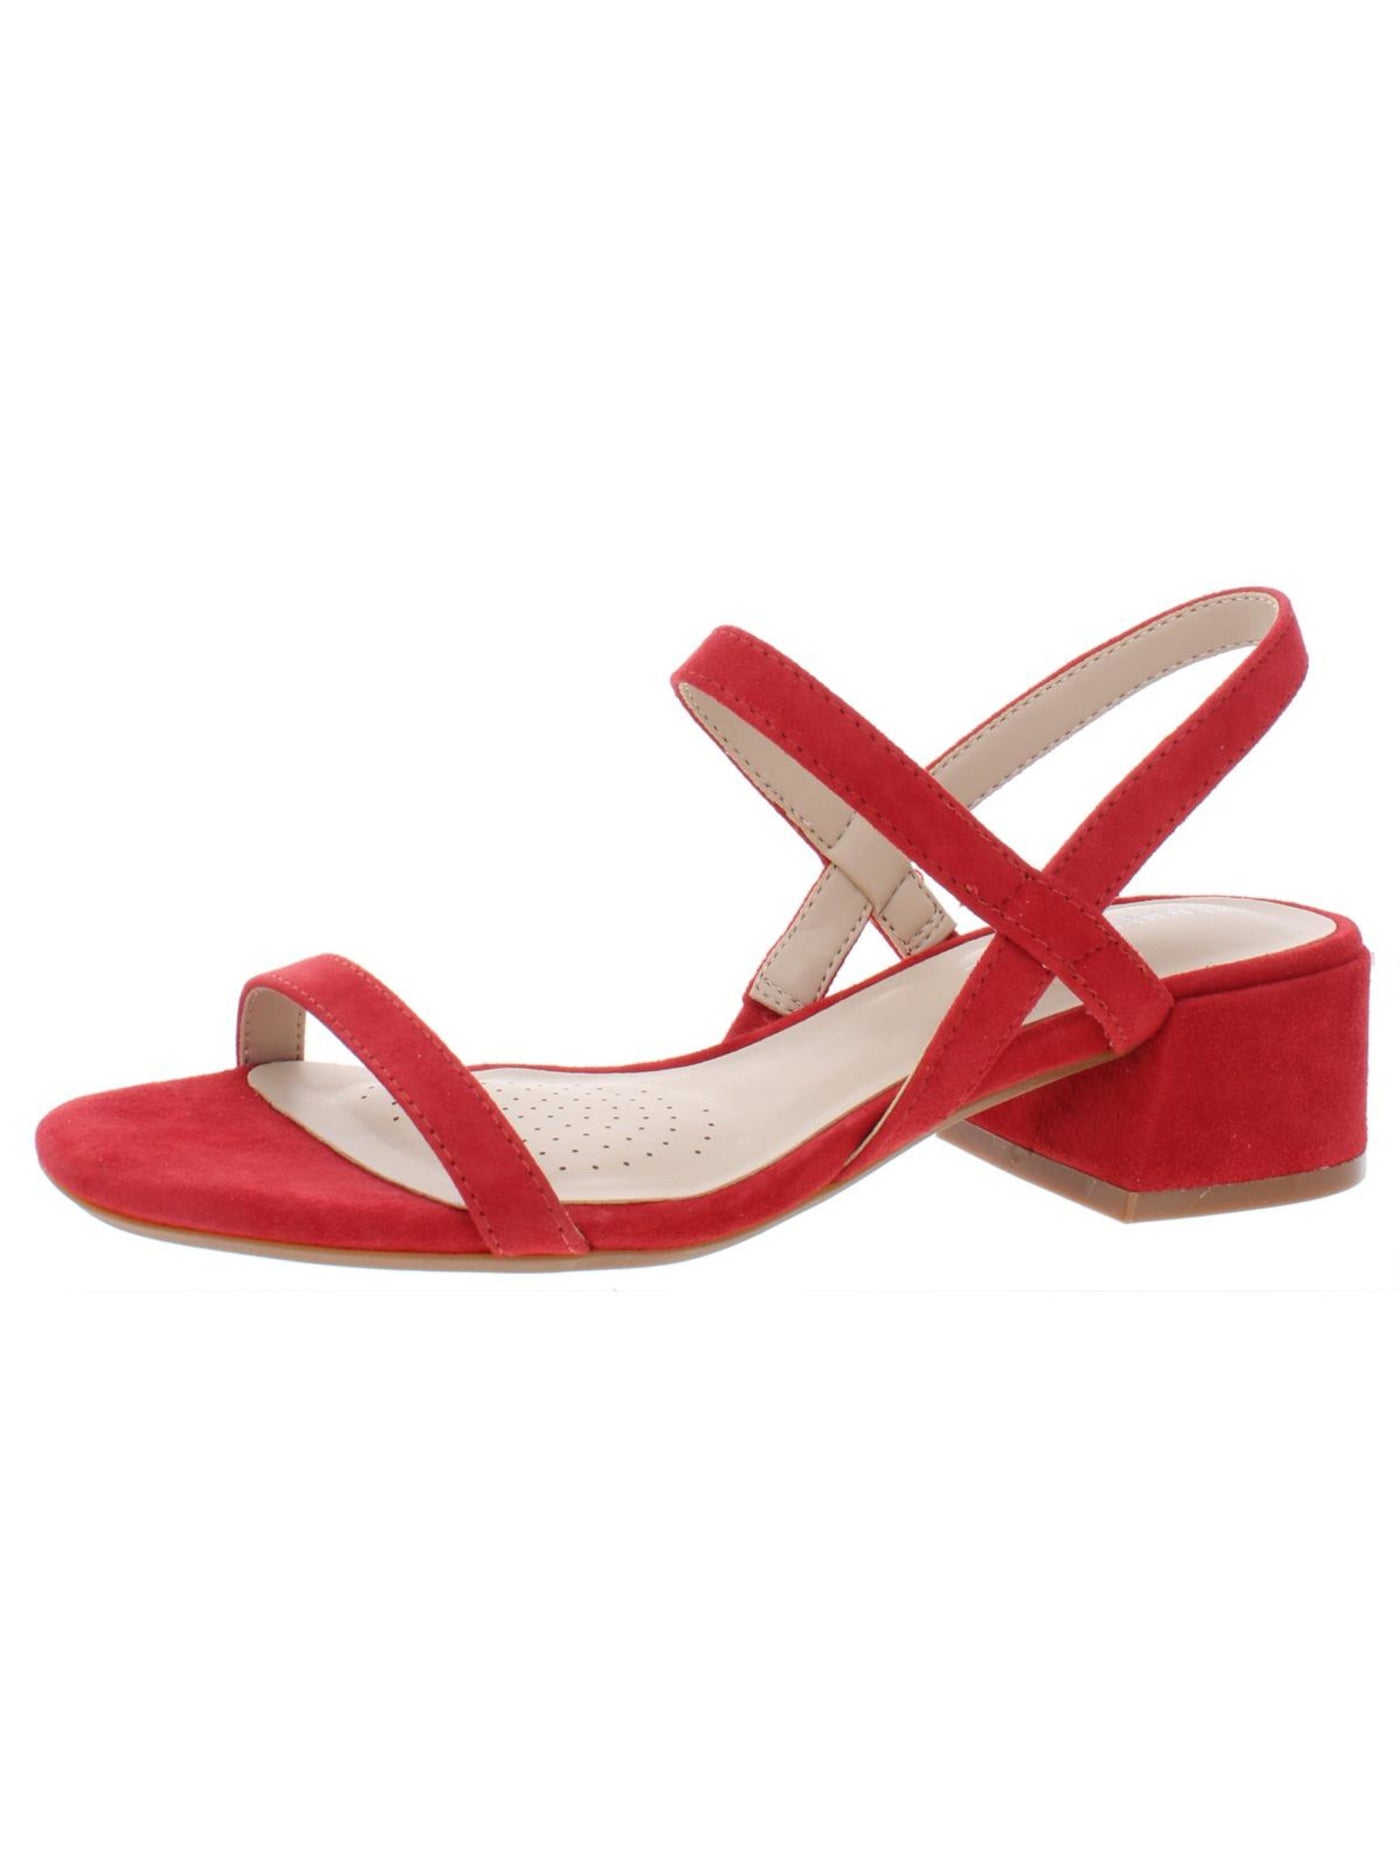 KENNETH COLE Womens Red Adjustable Padded Maisie Round Toe Block Heel Slip On Leather Dress Slingback Sandal 11 M